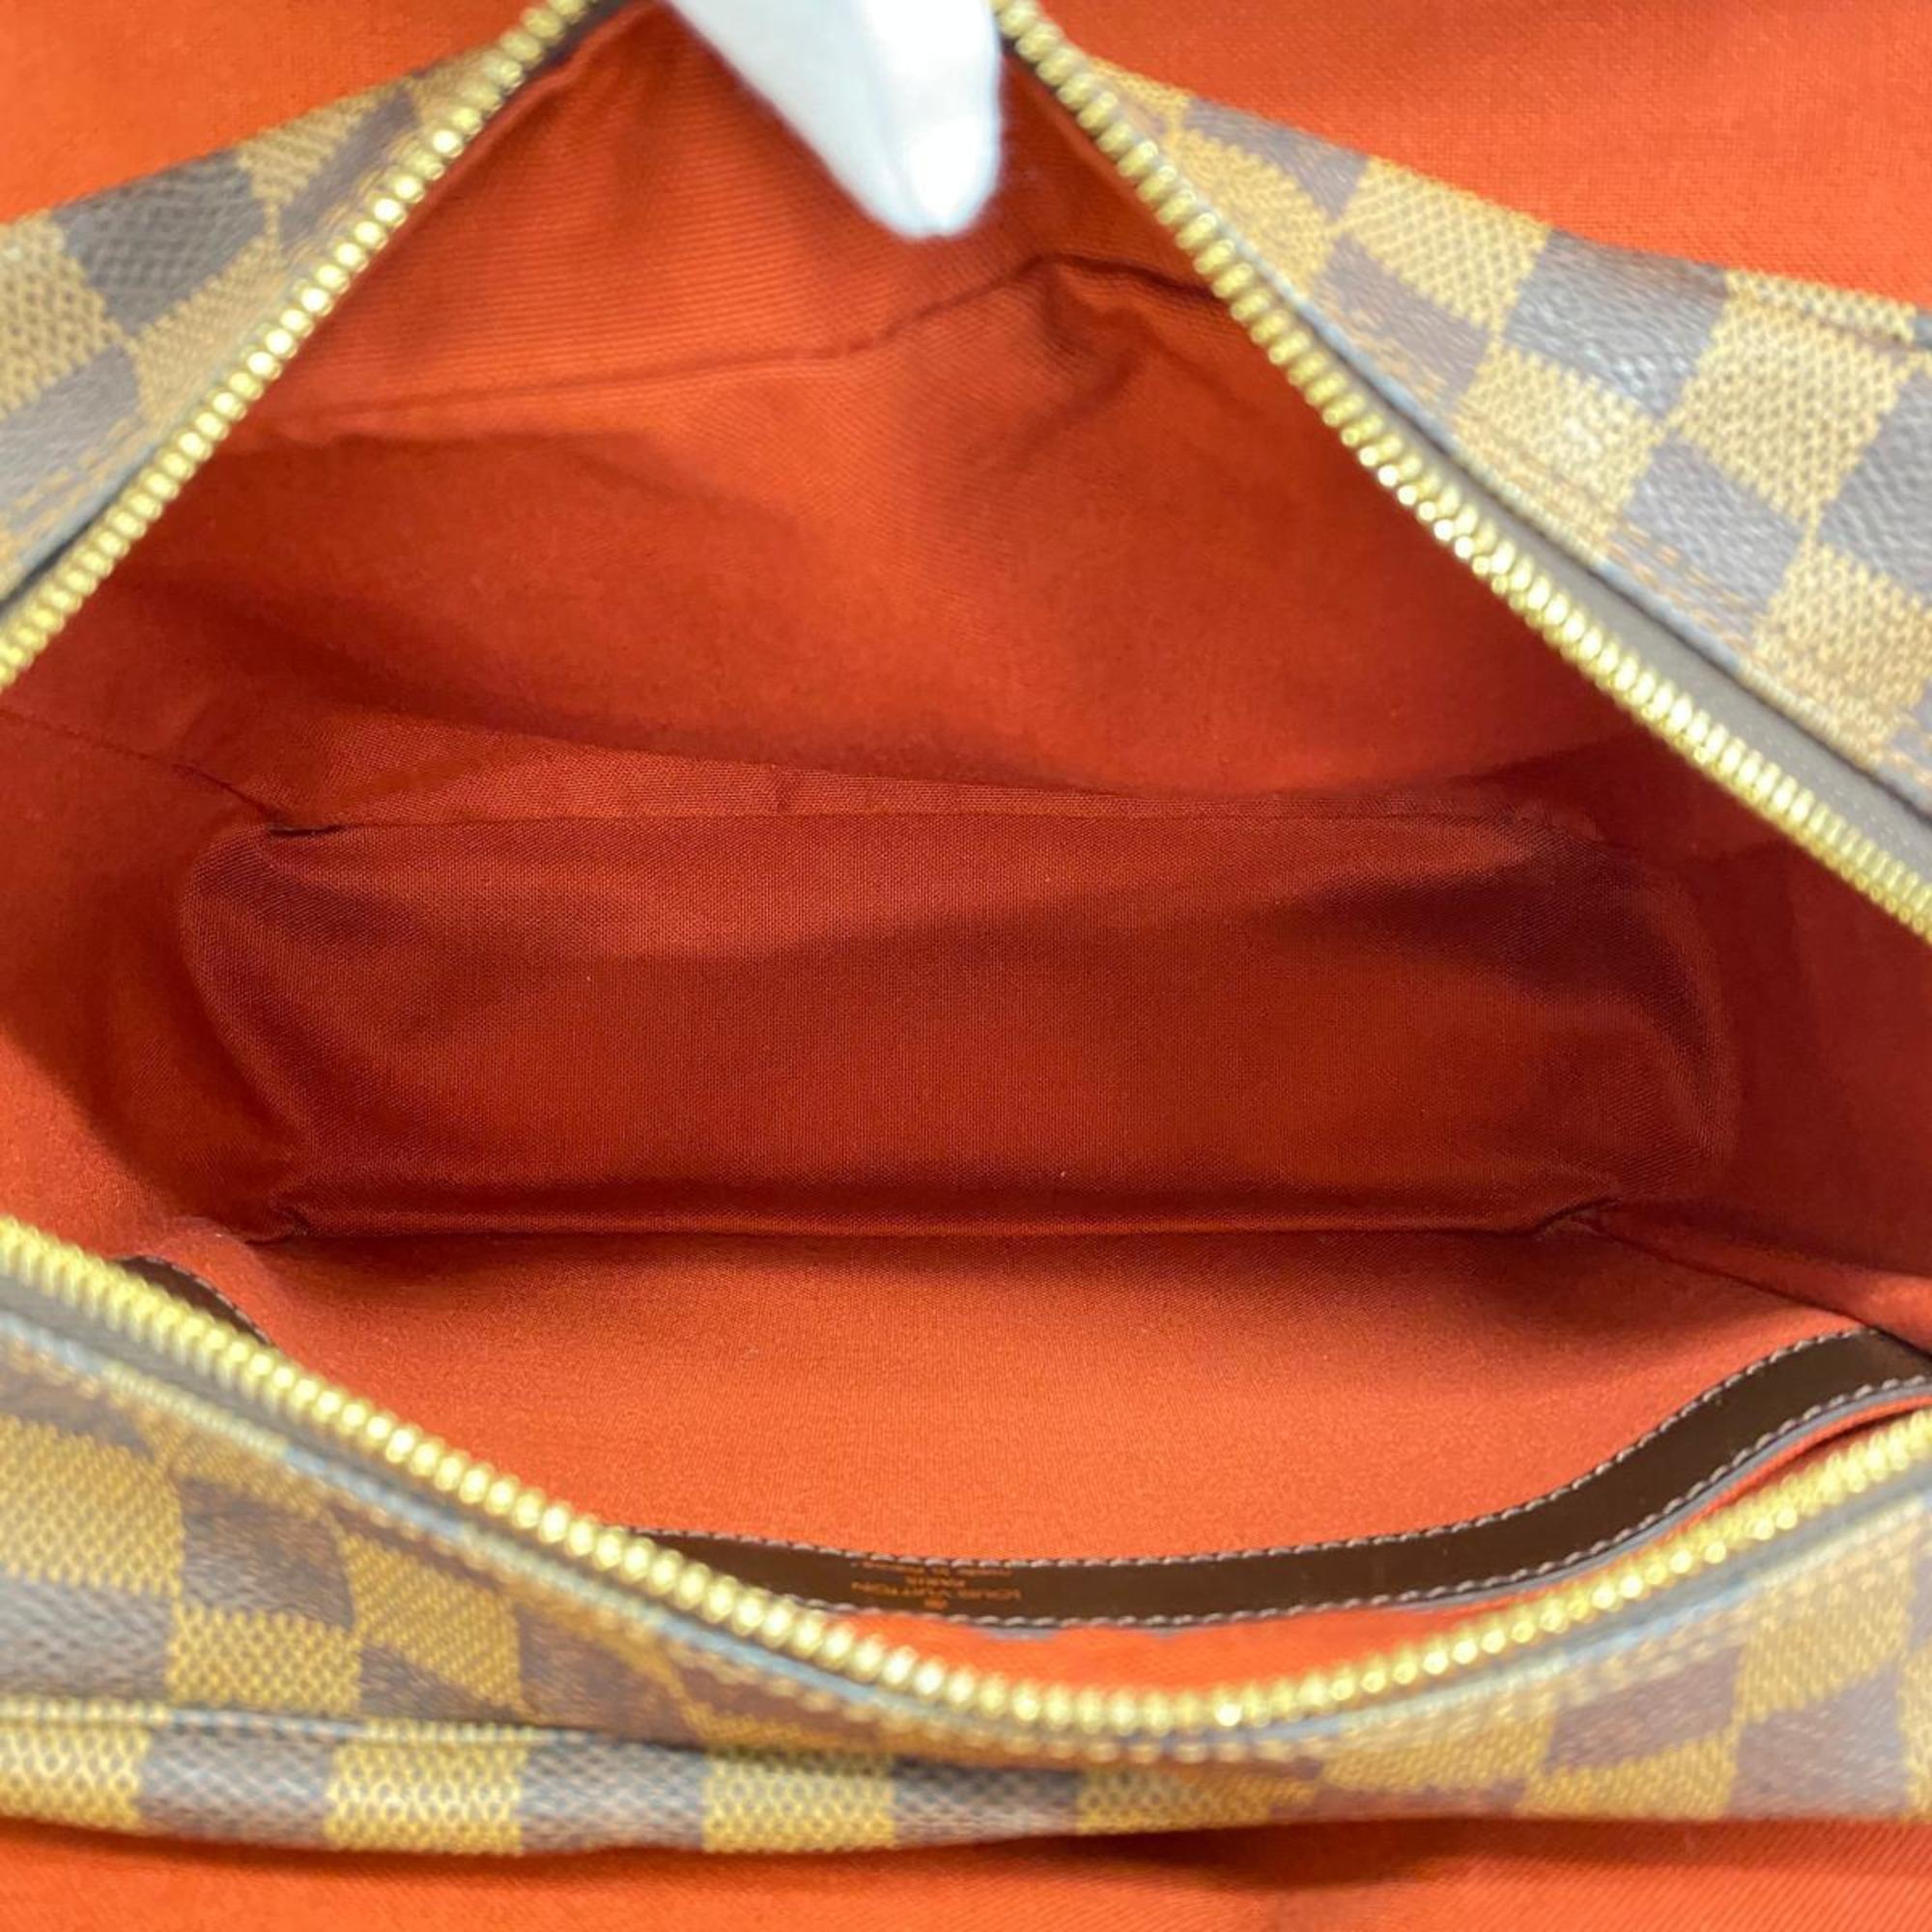 Louis Vuitton Shoulder Bag Damier Naviglio N45255 Ebene Men's Women's